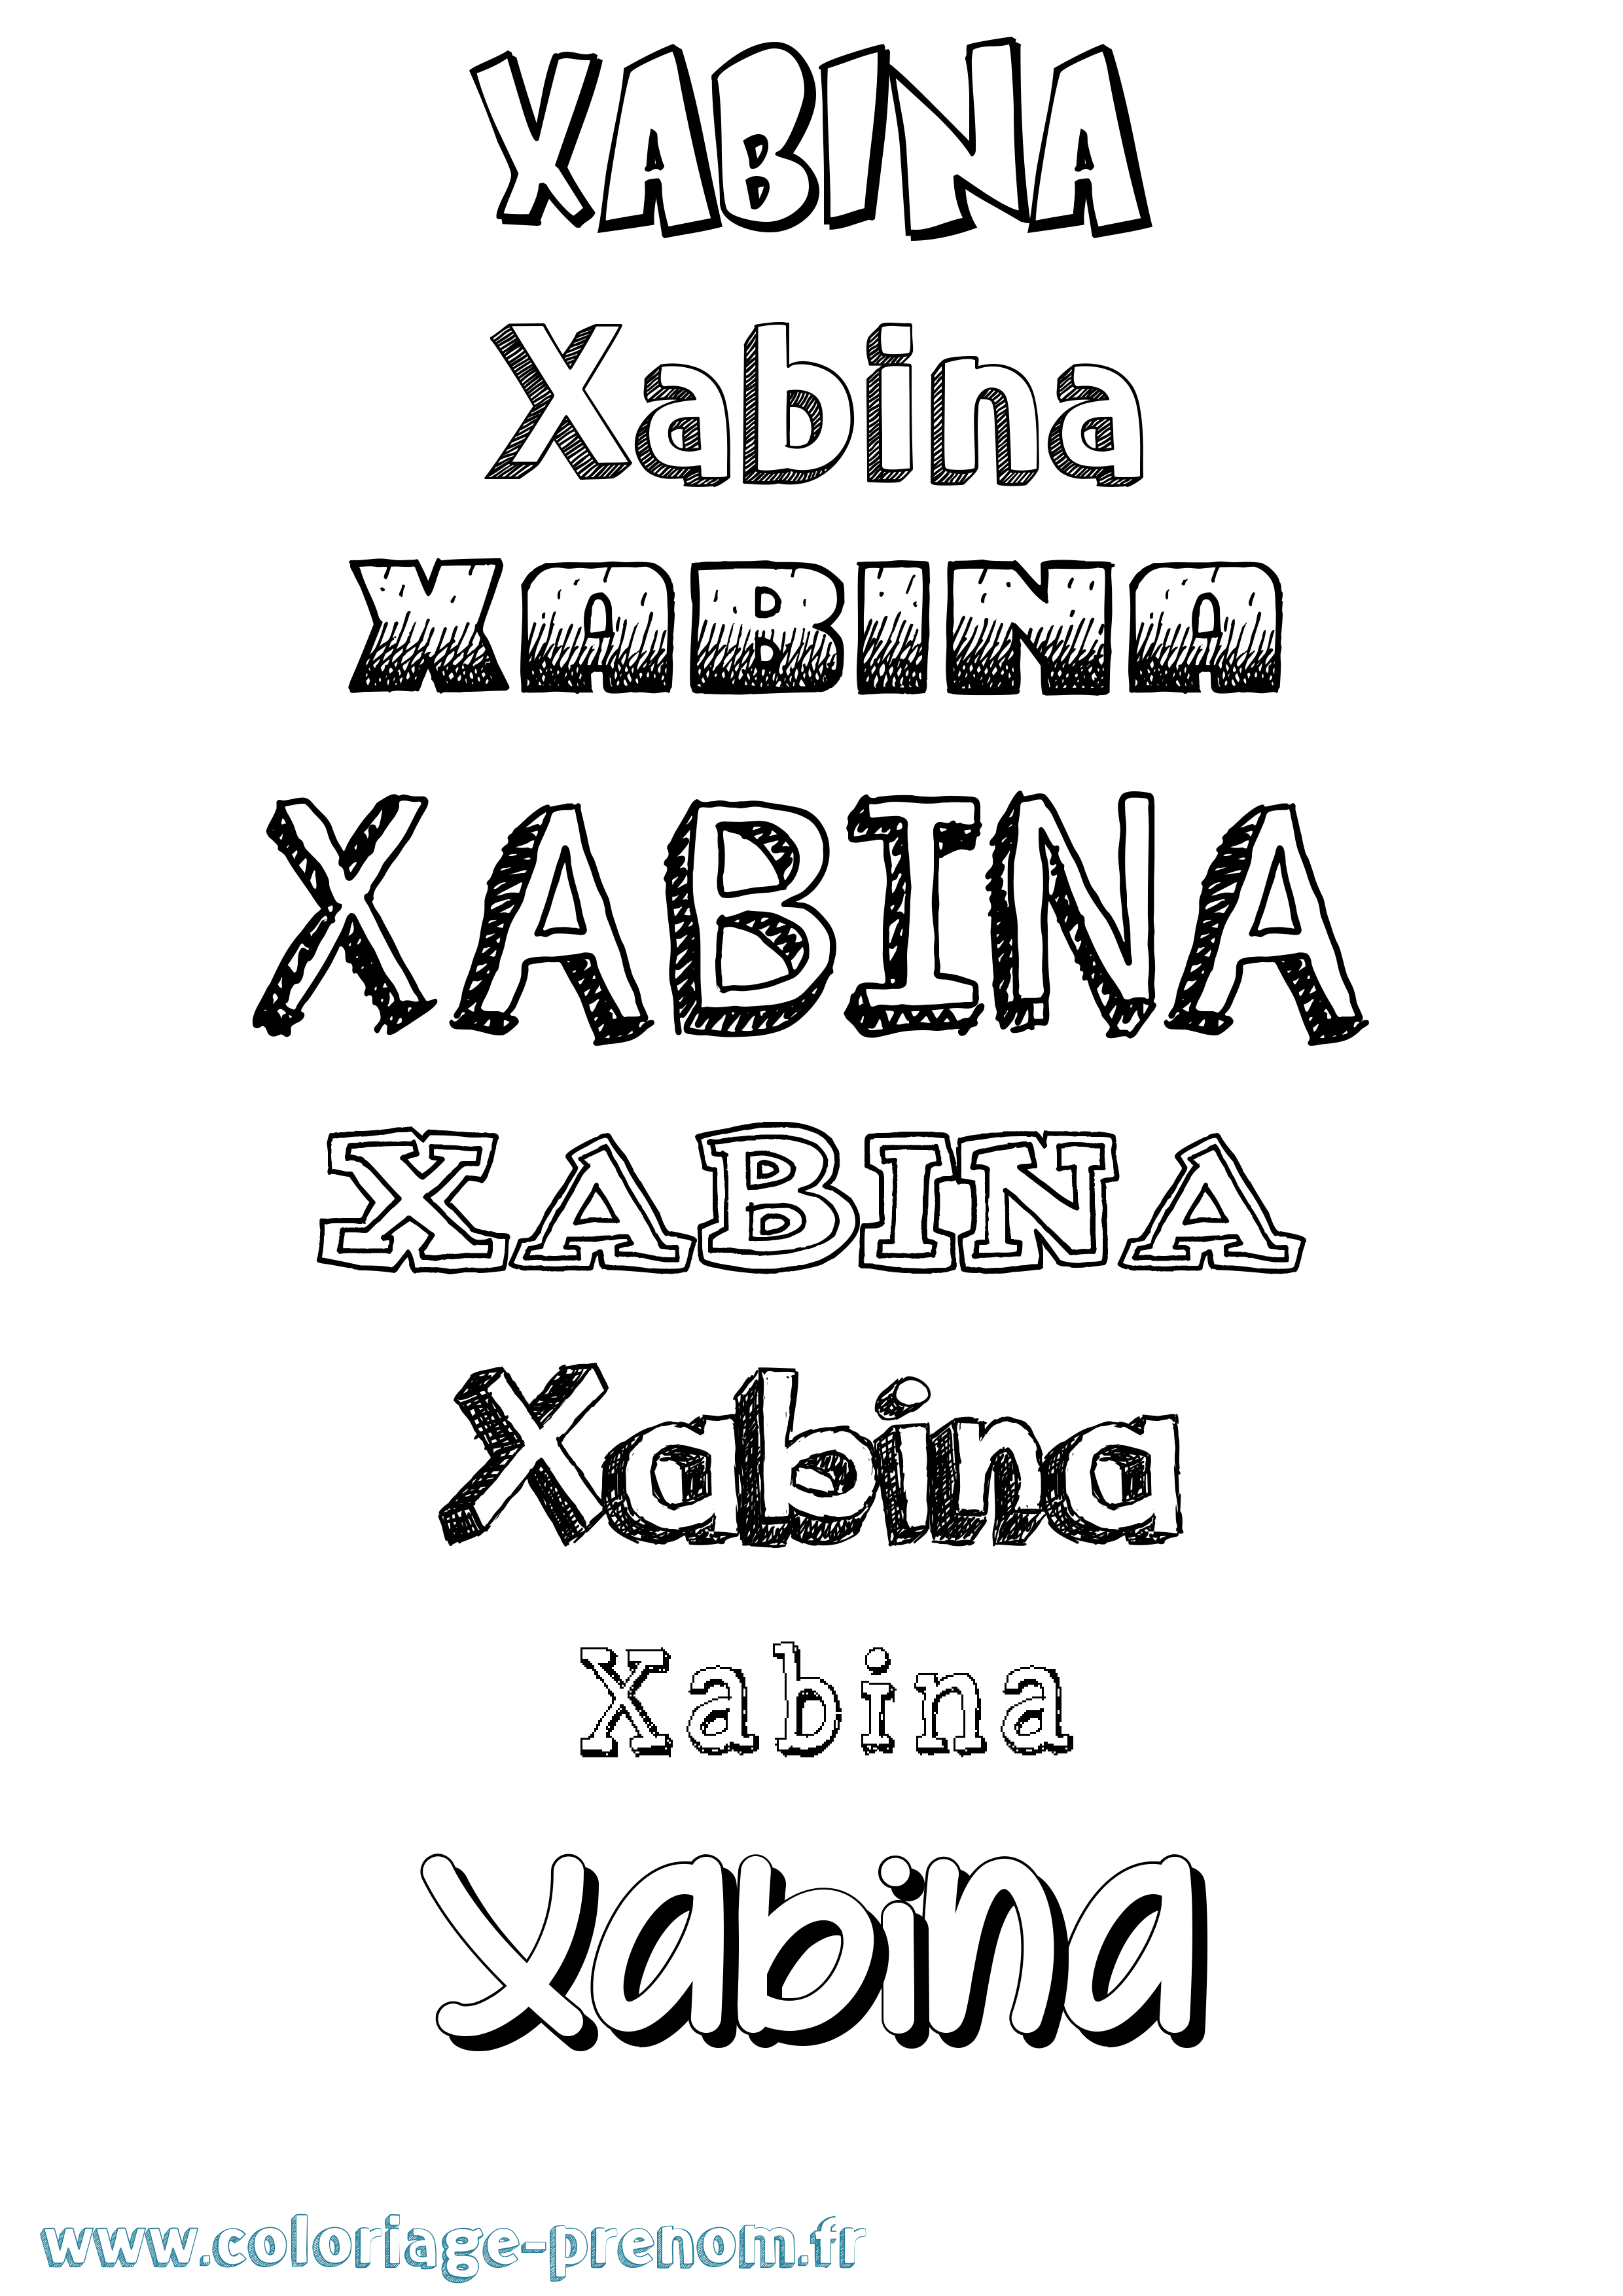 Coloriage prénom Xabina Dessiné